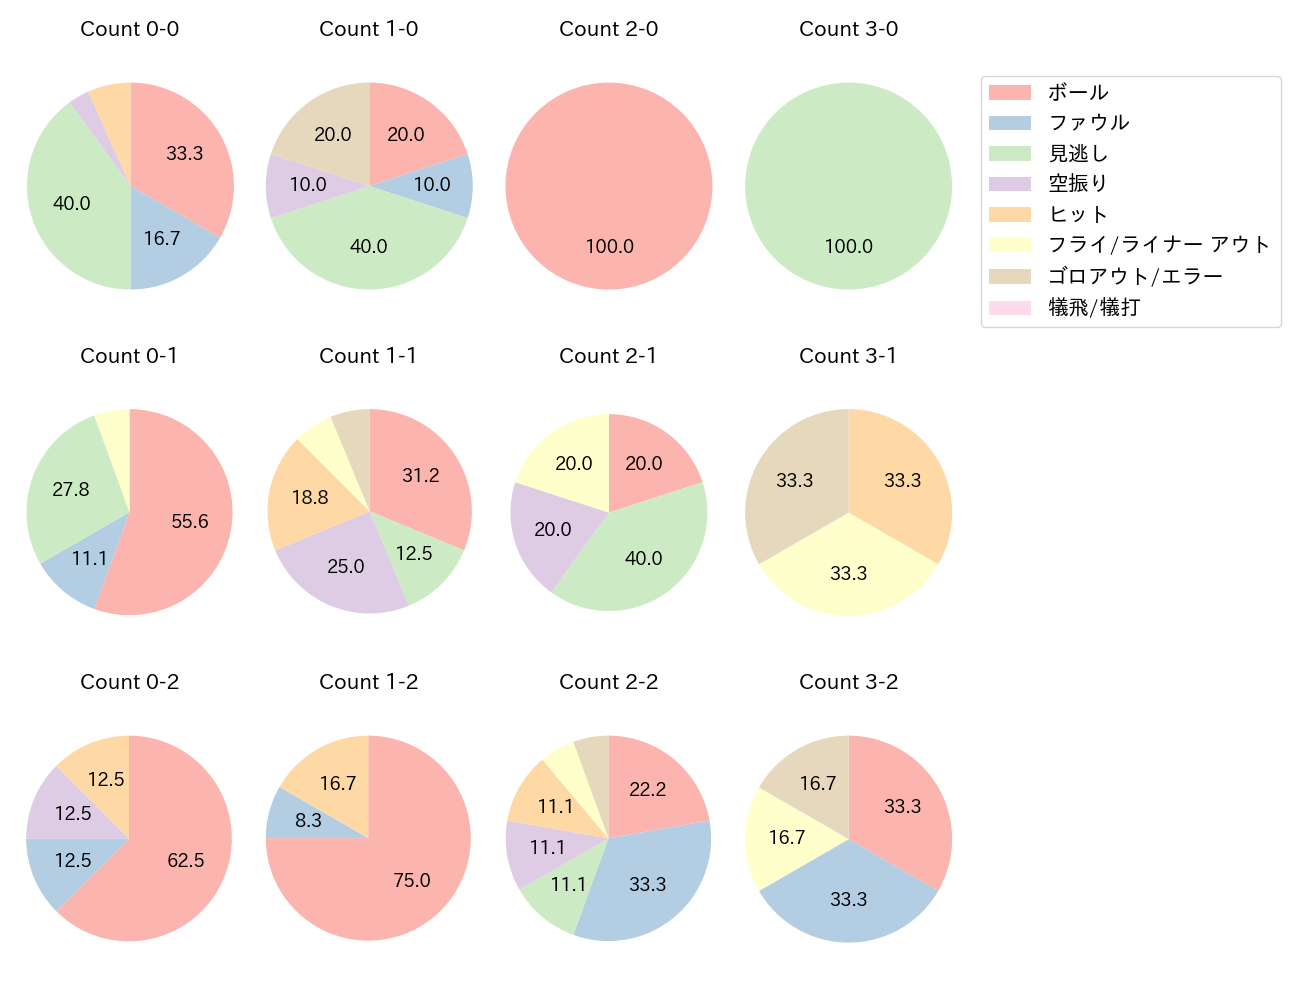 安田 尚憲の球数分布(2021年8月)